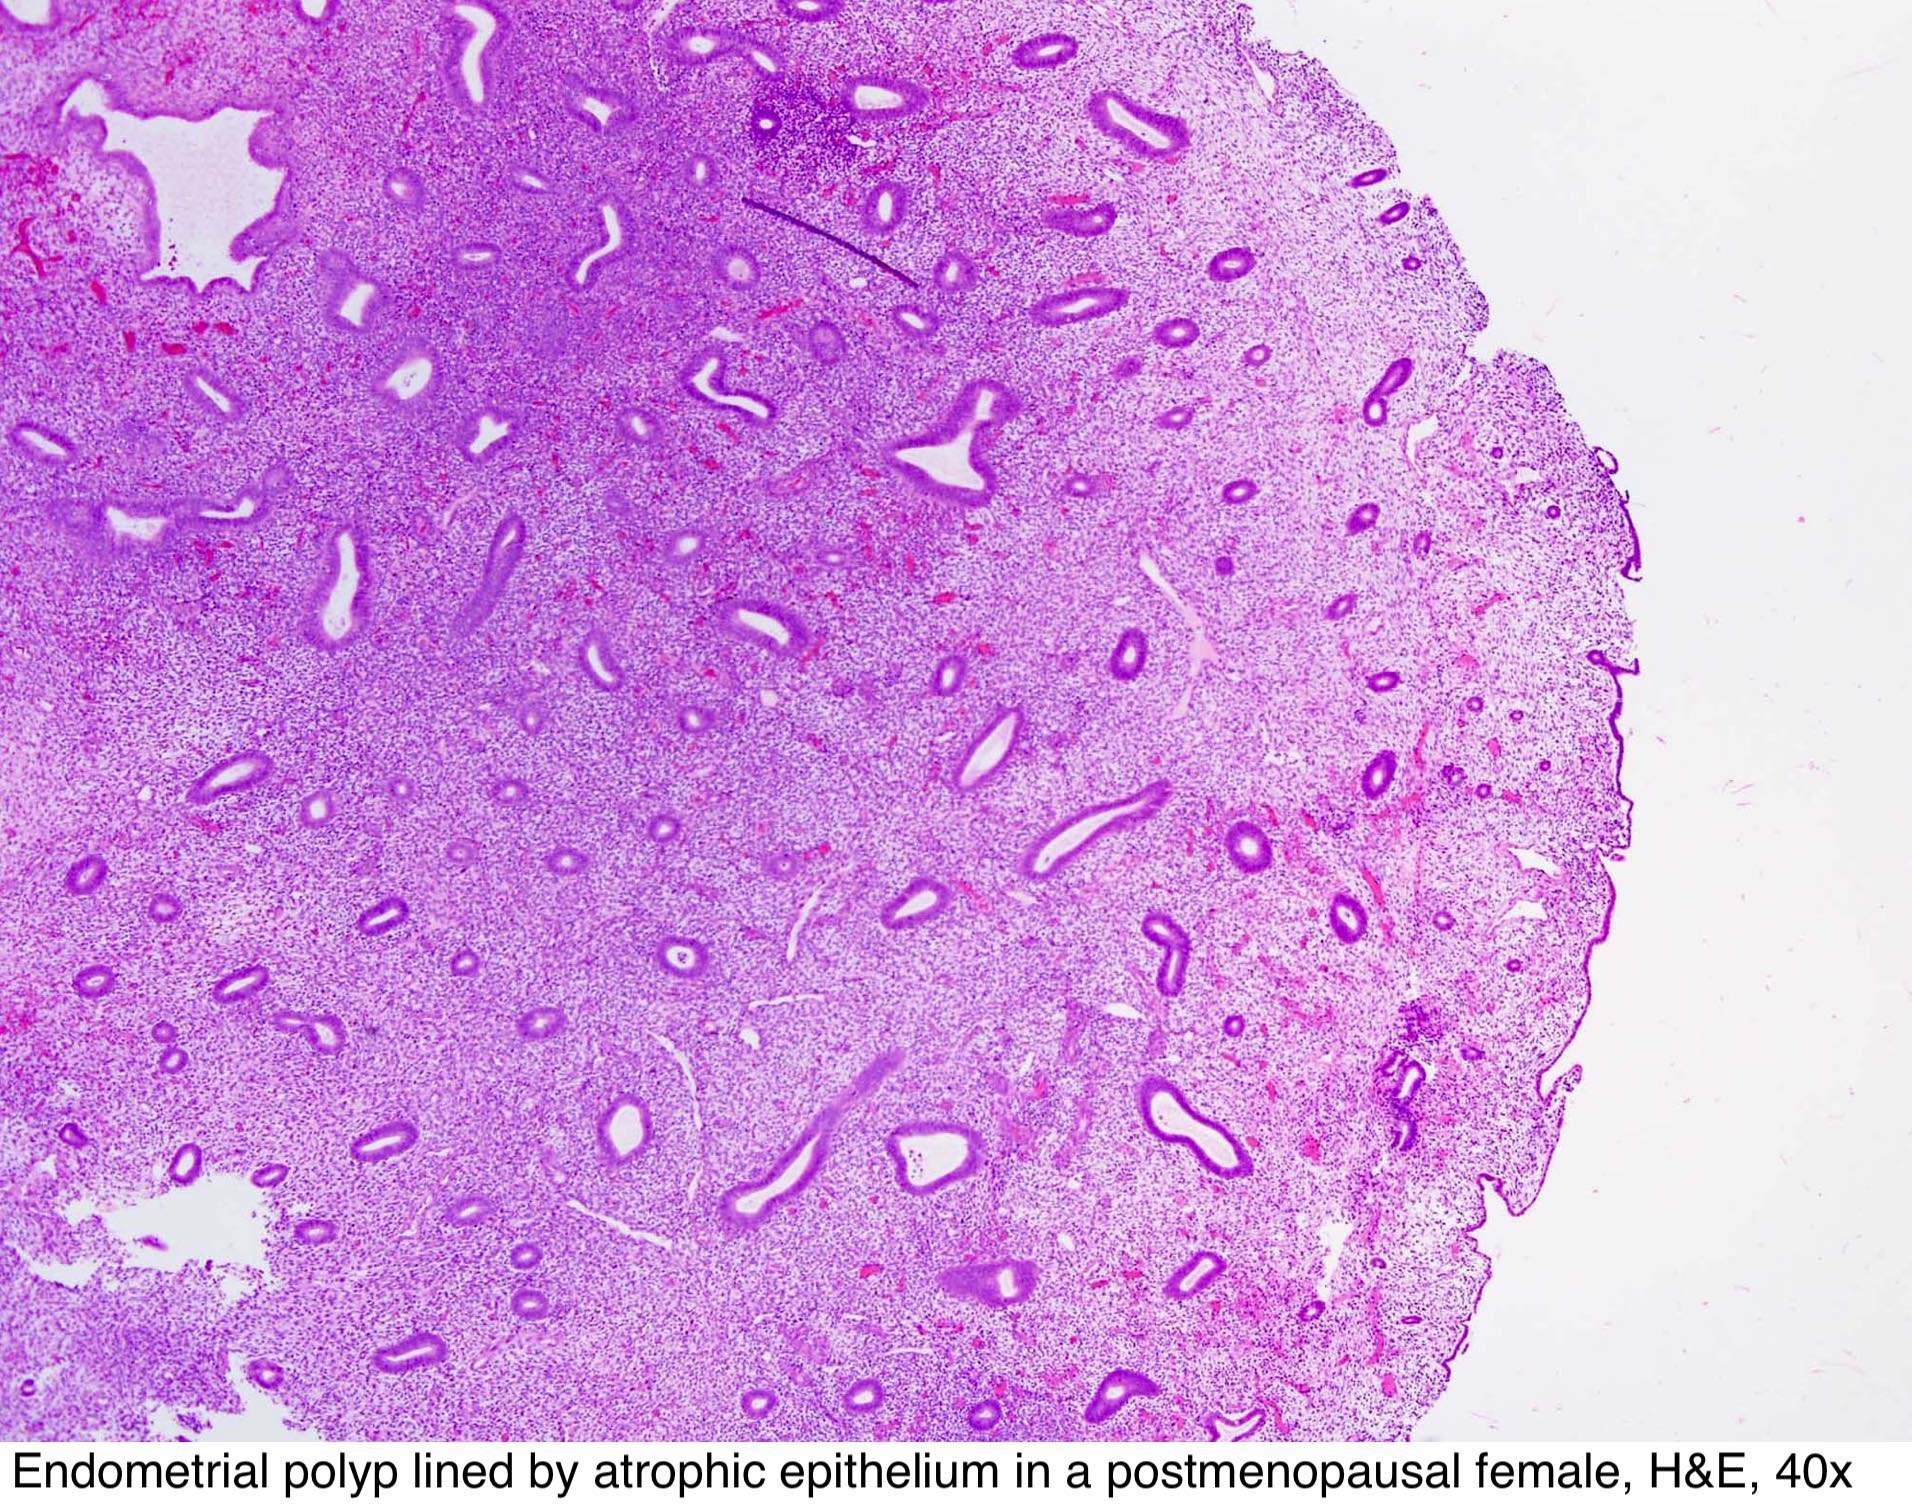 Pathology Outlines - Endometrial polyp